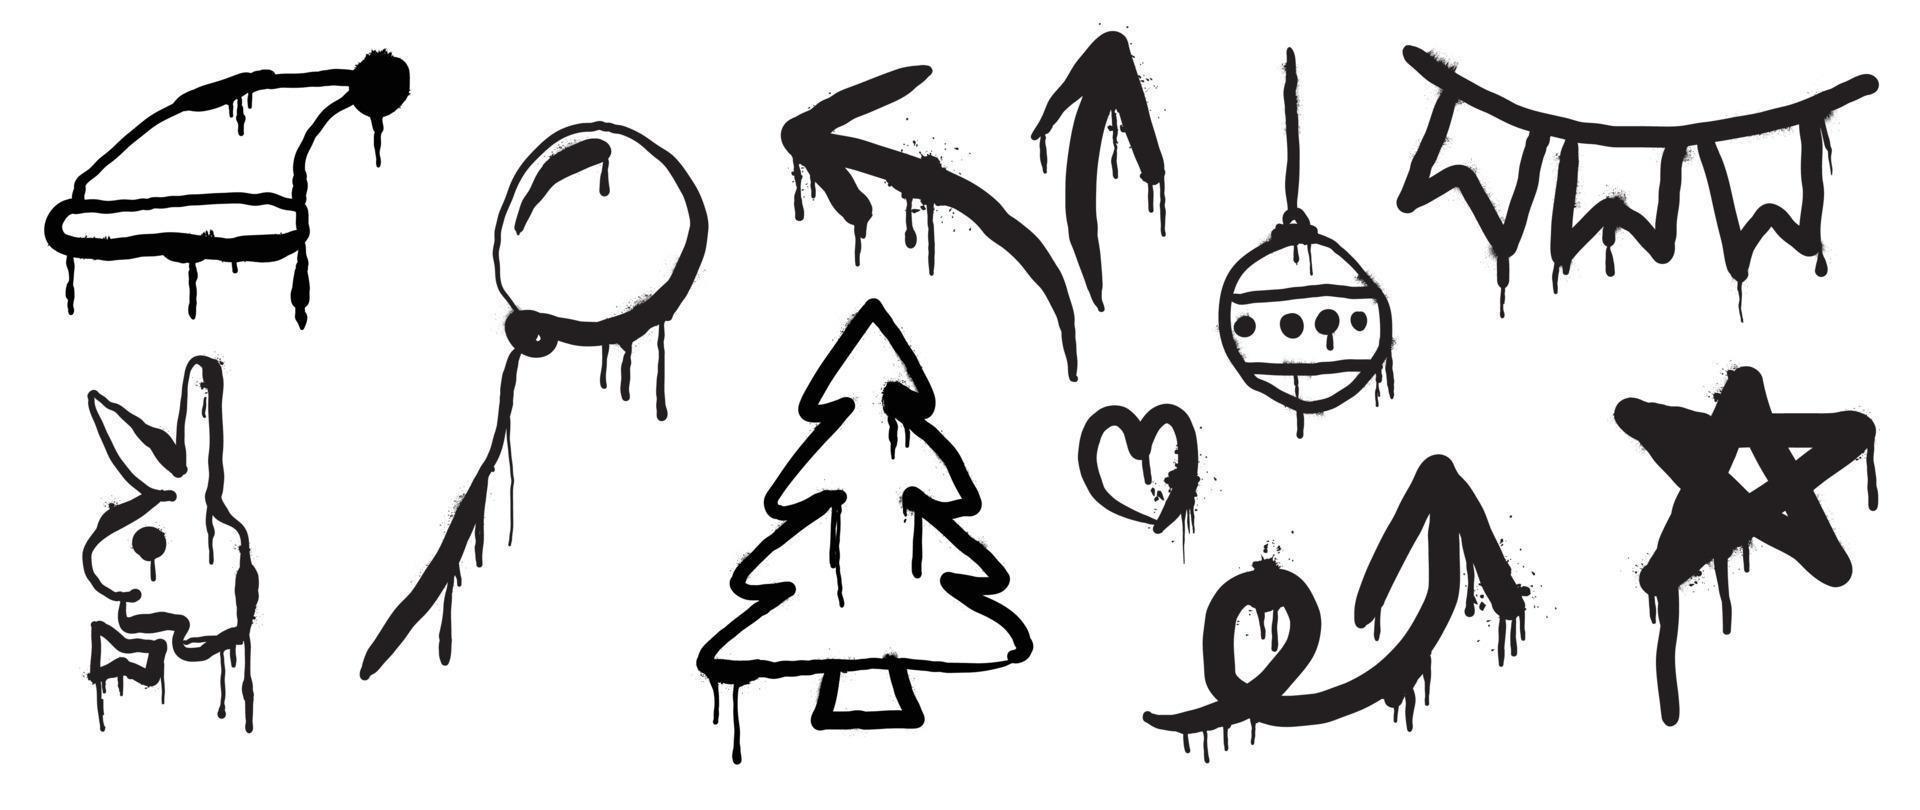 Set of christmas elements black spray paint vector. Graffiti, grunge elements of santa hat, balloon, tree, rabbit, bauble, star on white background. Design illustration for decoration, card, sticker. vector